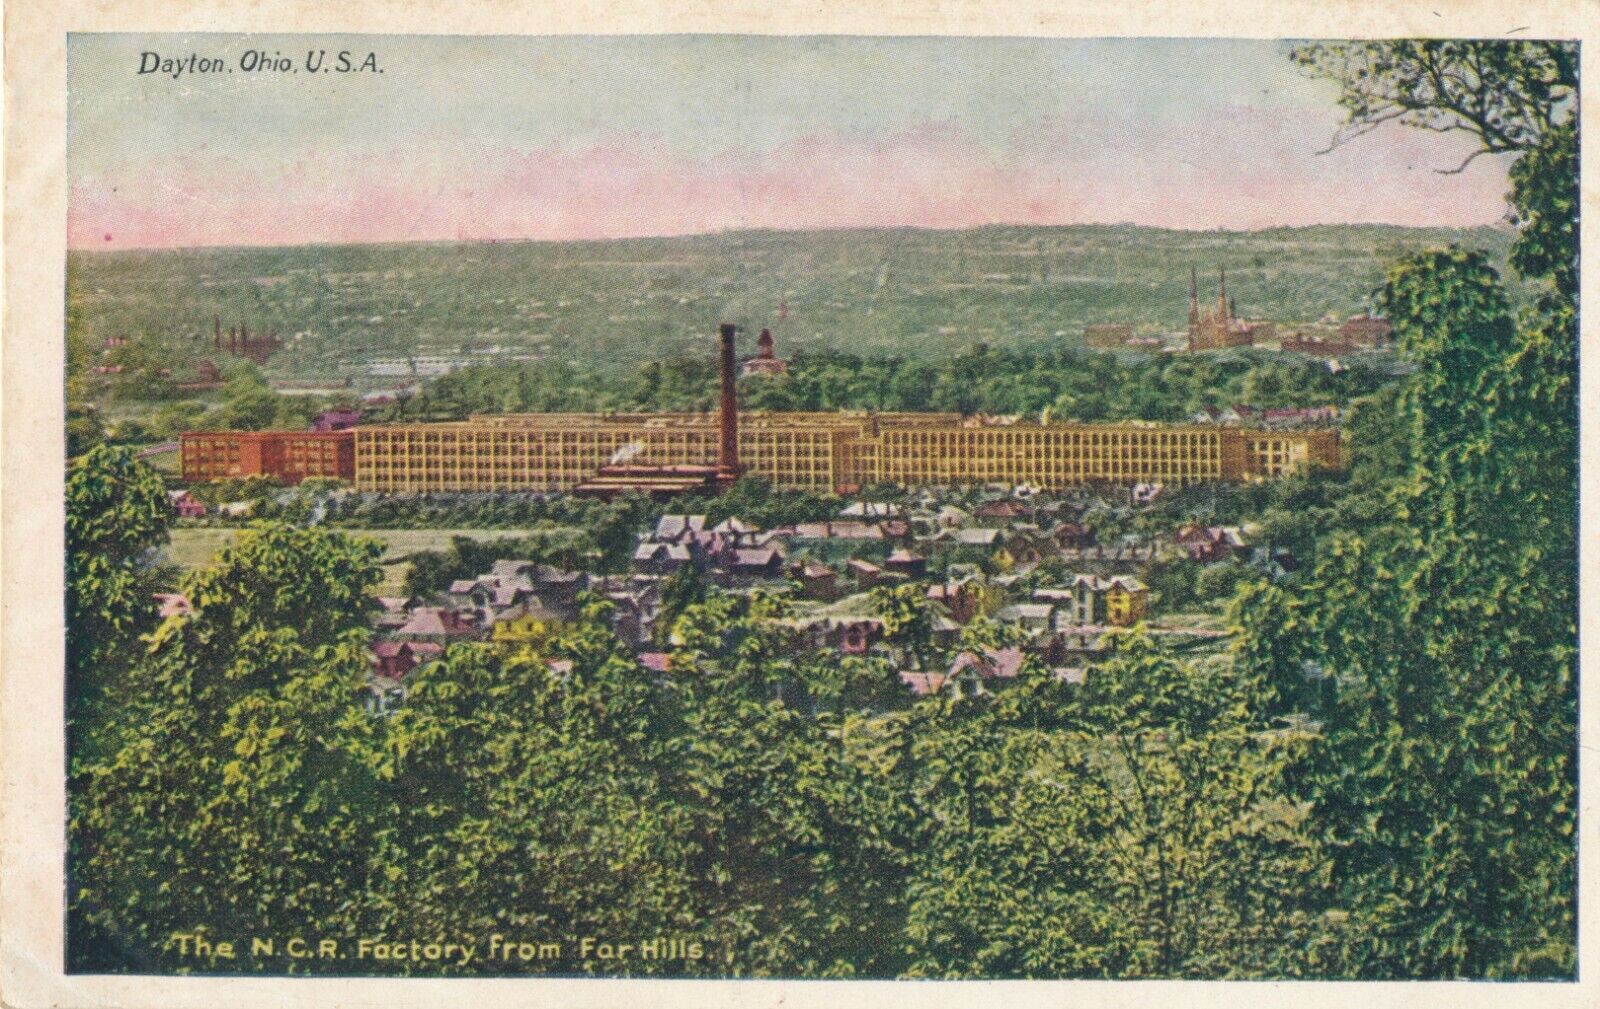 c1905 Dayton, Ohio N.C.R. Factory from far hills Hand Colored UB Postcard